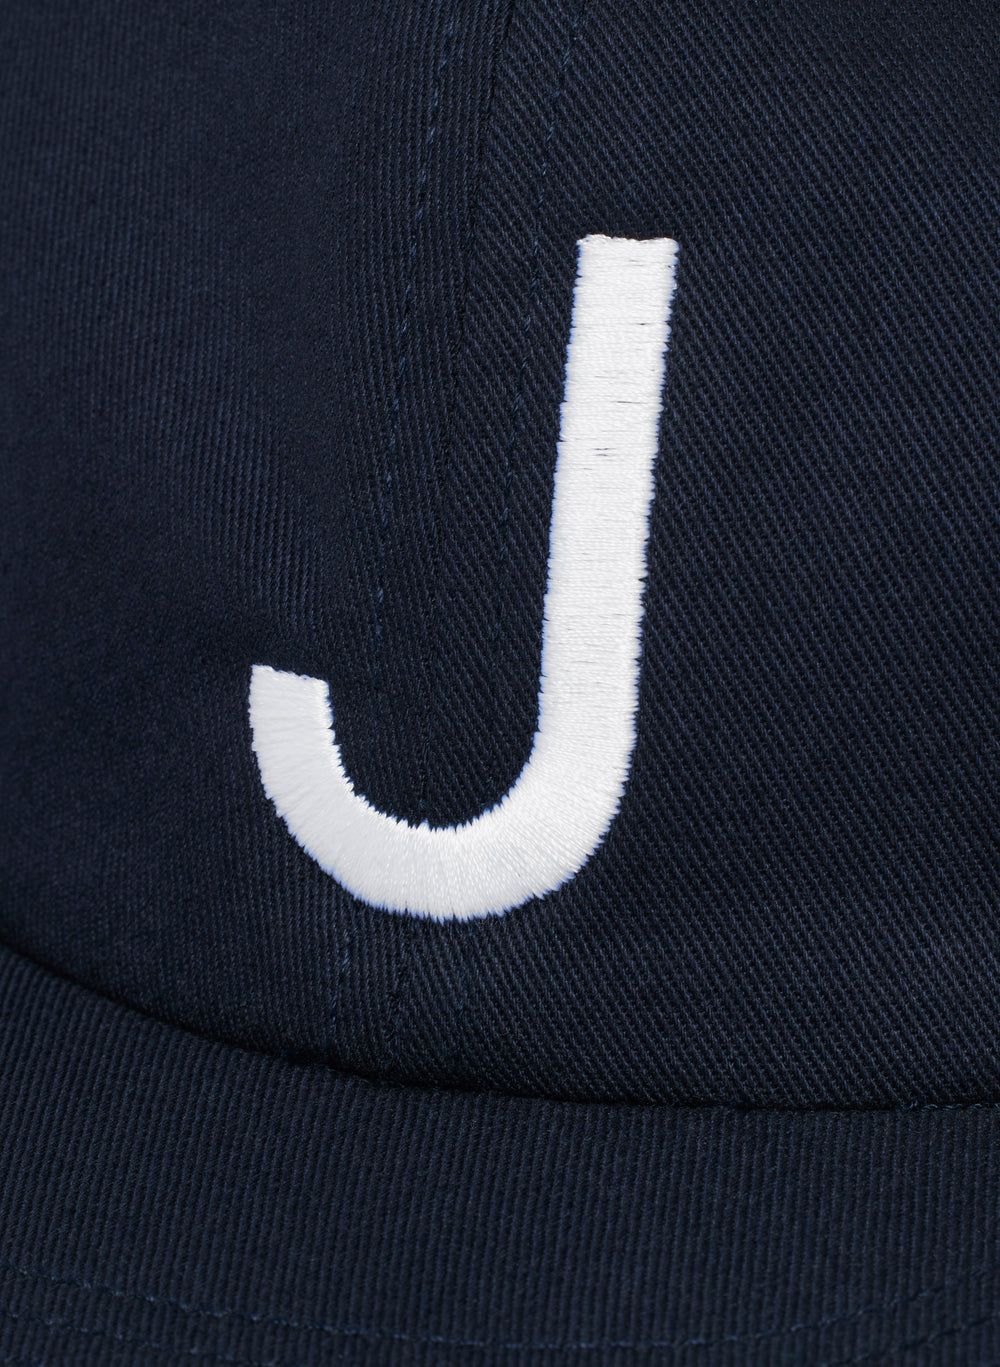 J Brand Cap - Navy